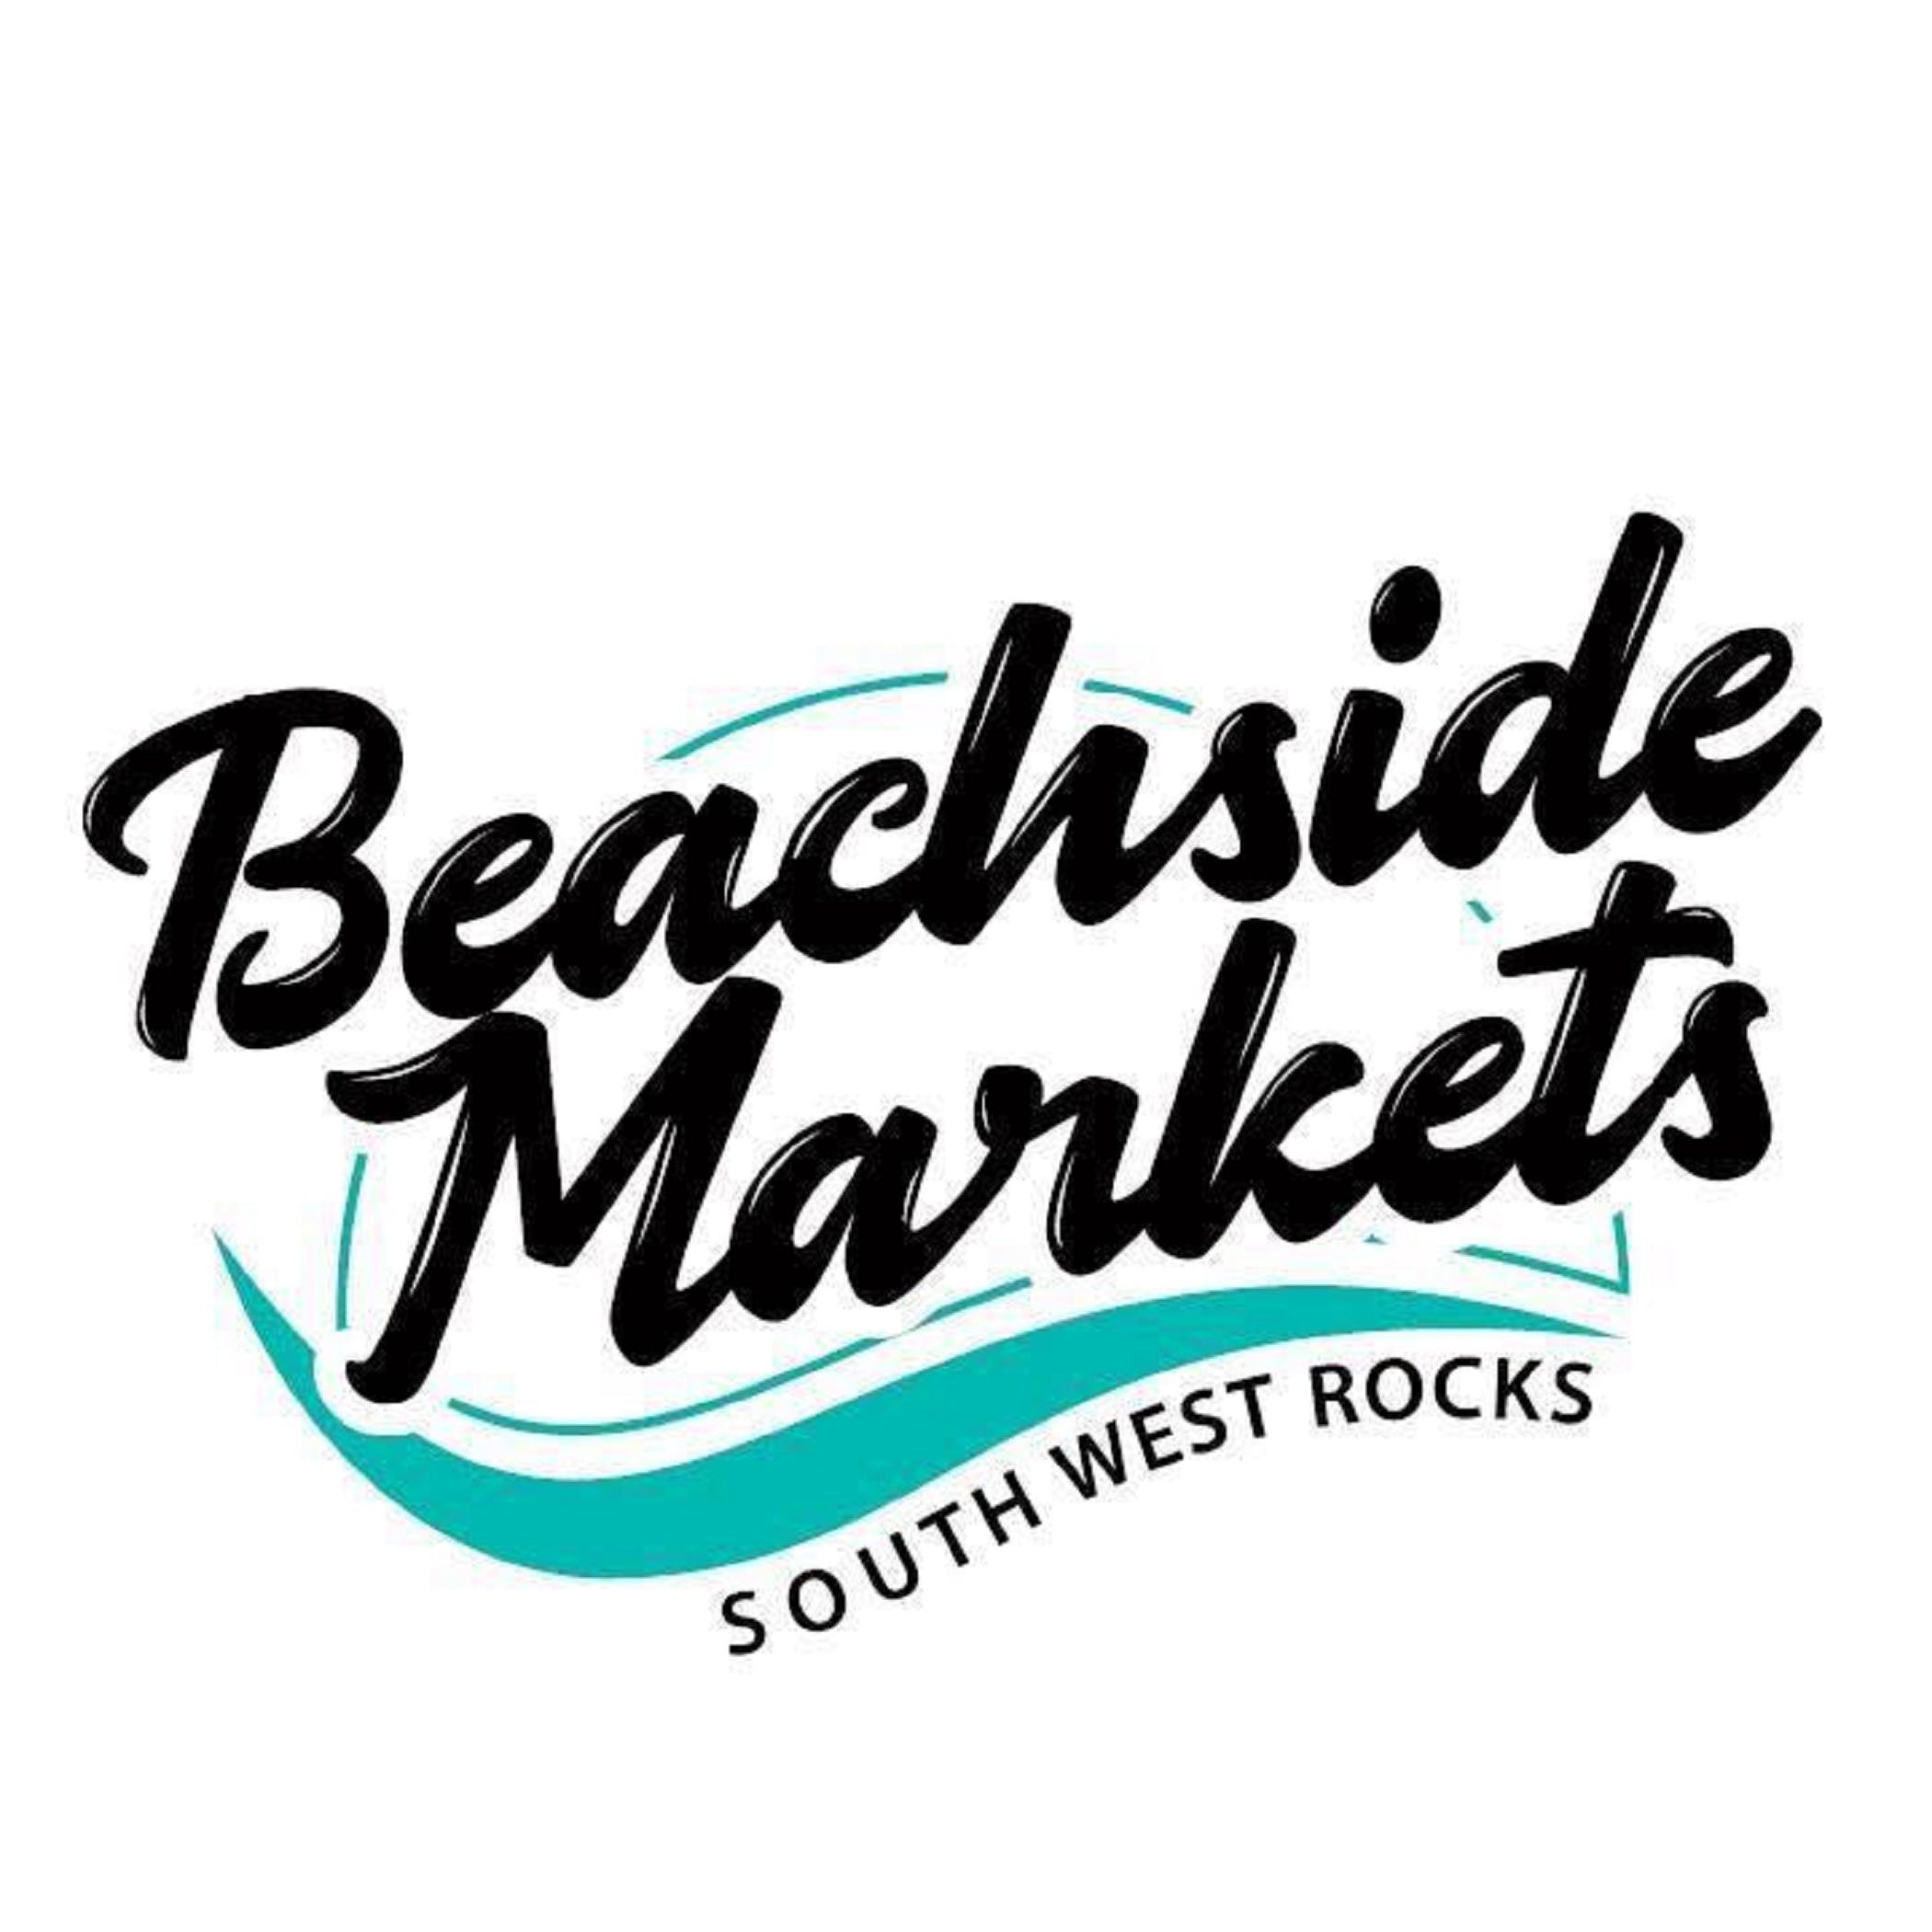 Beachside Markets South West Rocks - Broome Tourism